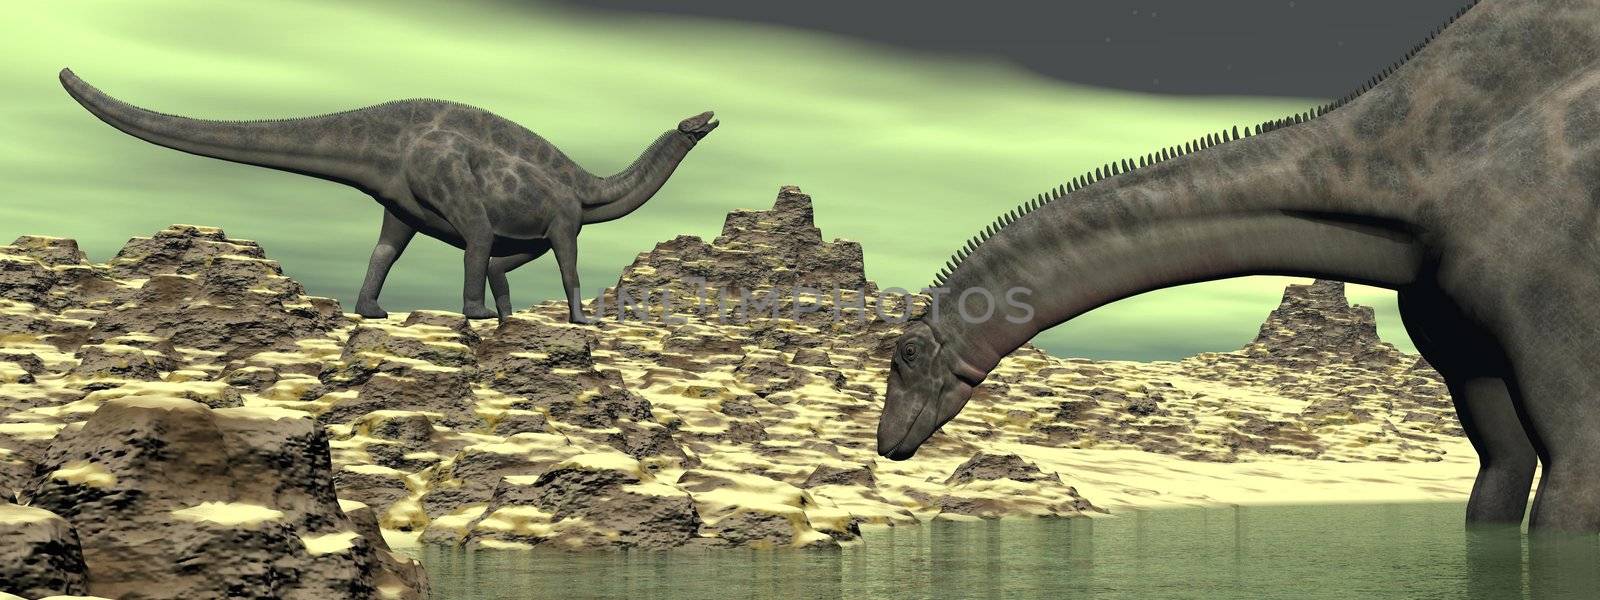 Two dicraeosaurus dinosaurs in a green desert landscape